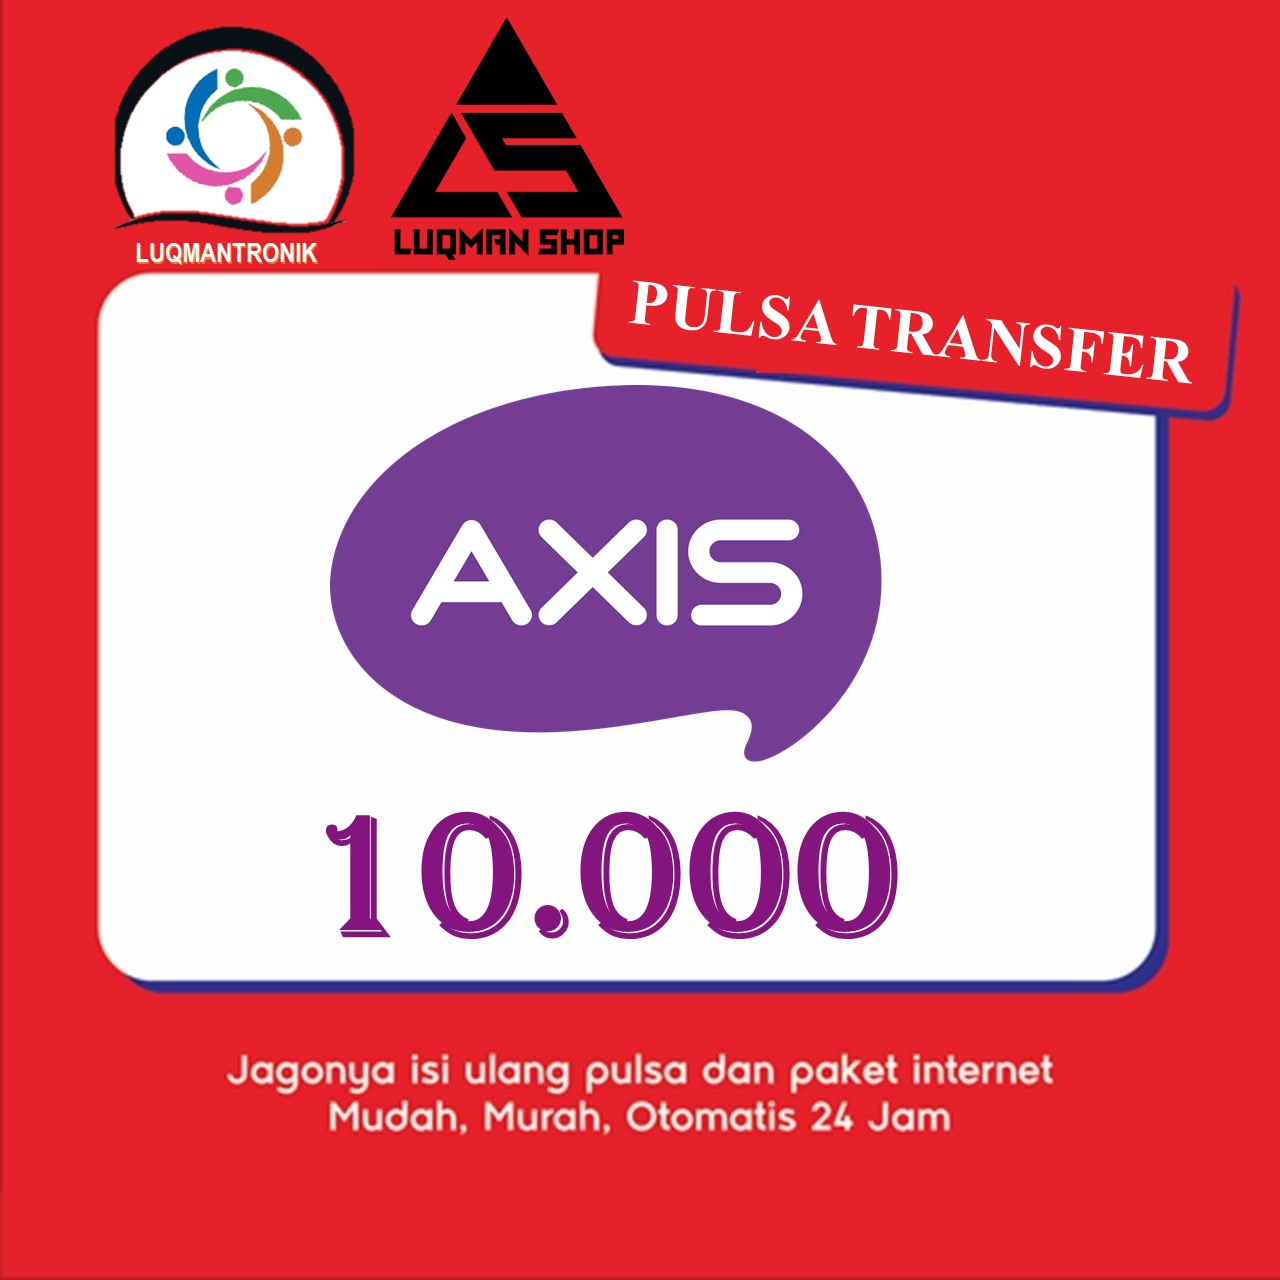 PULSA TRANSFER AXIS - PULSA TRANSFER AXIS 10.000